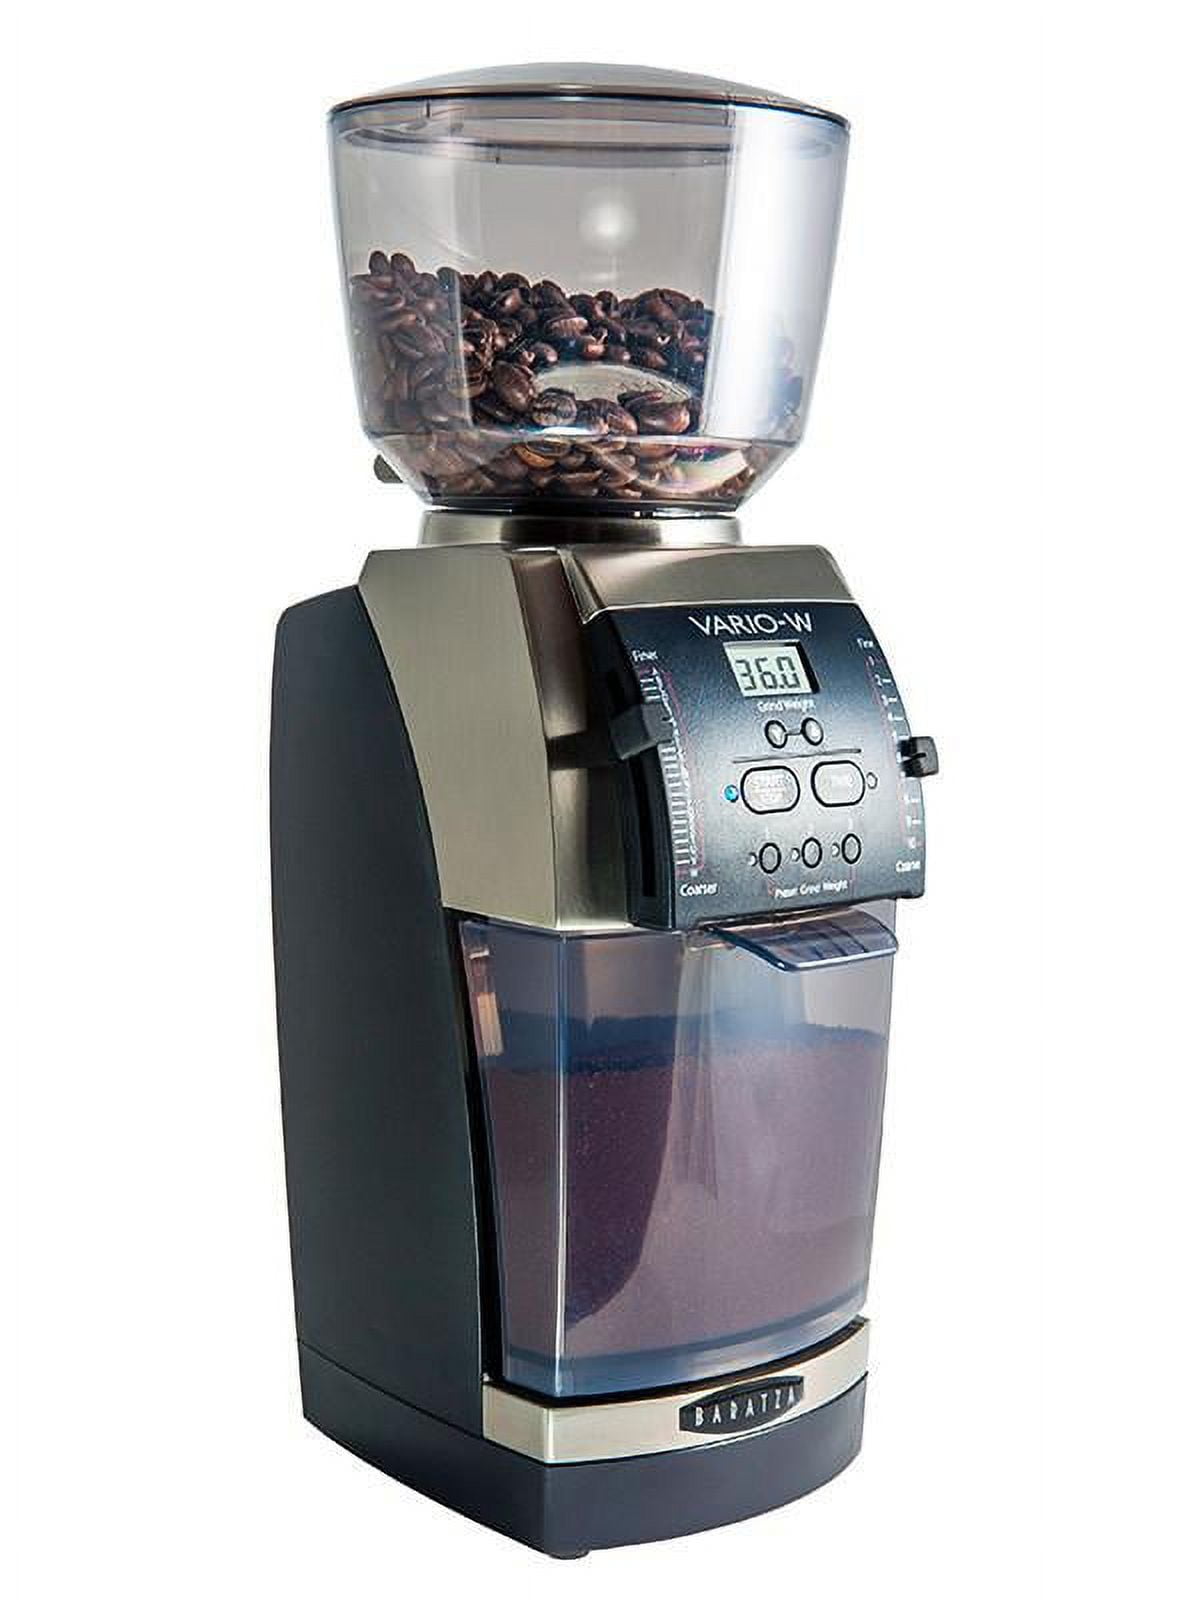  JAVASTARR Coffee Maker with Grinder Built in, Coffee